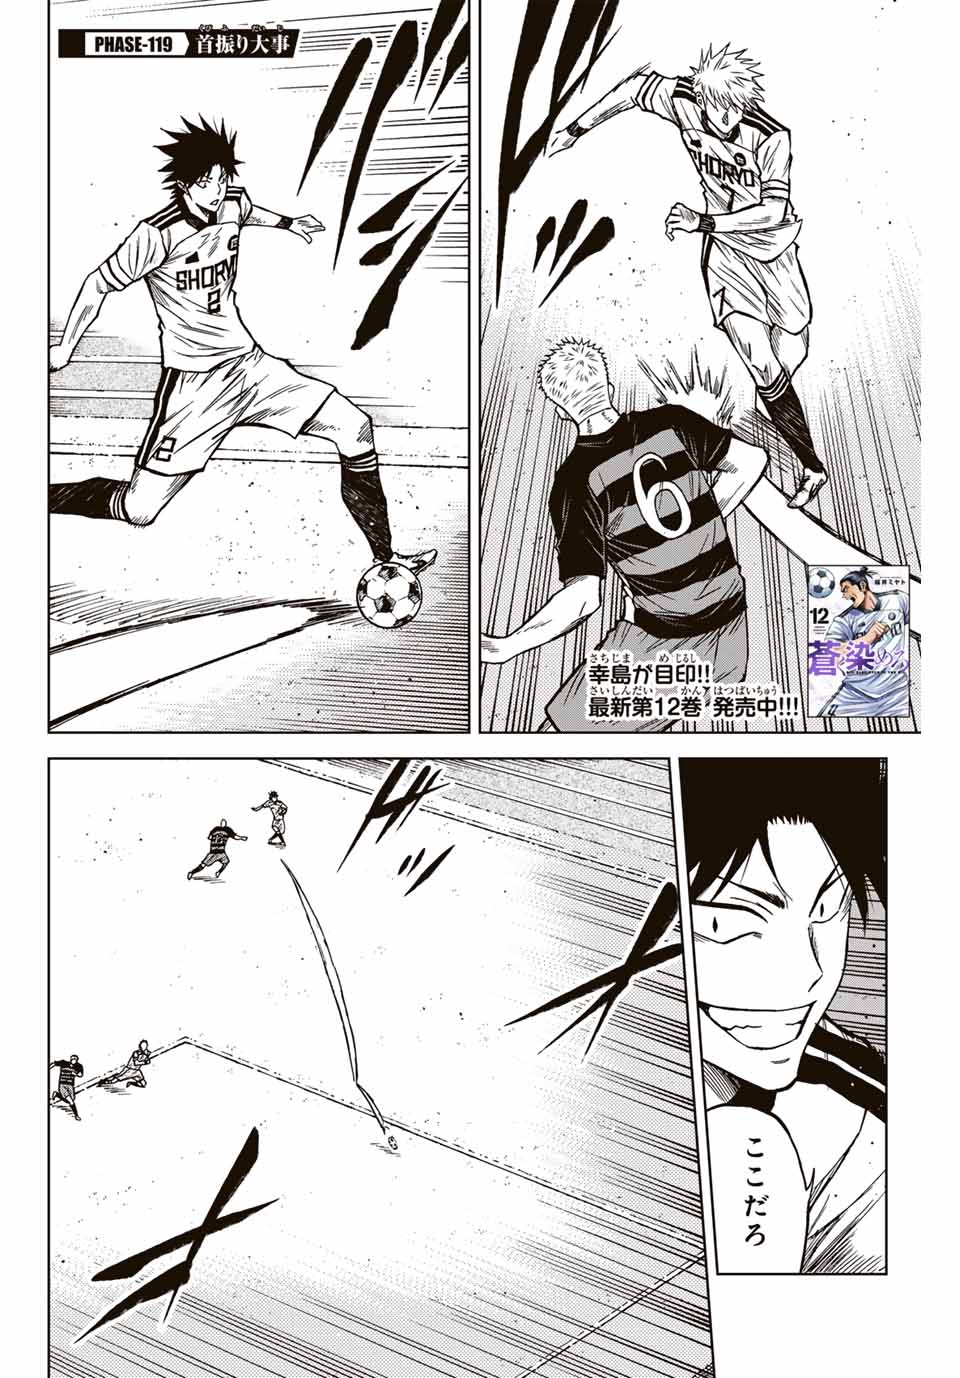 Aoku Somero - Chapter 119 - Page 2